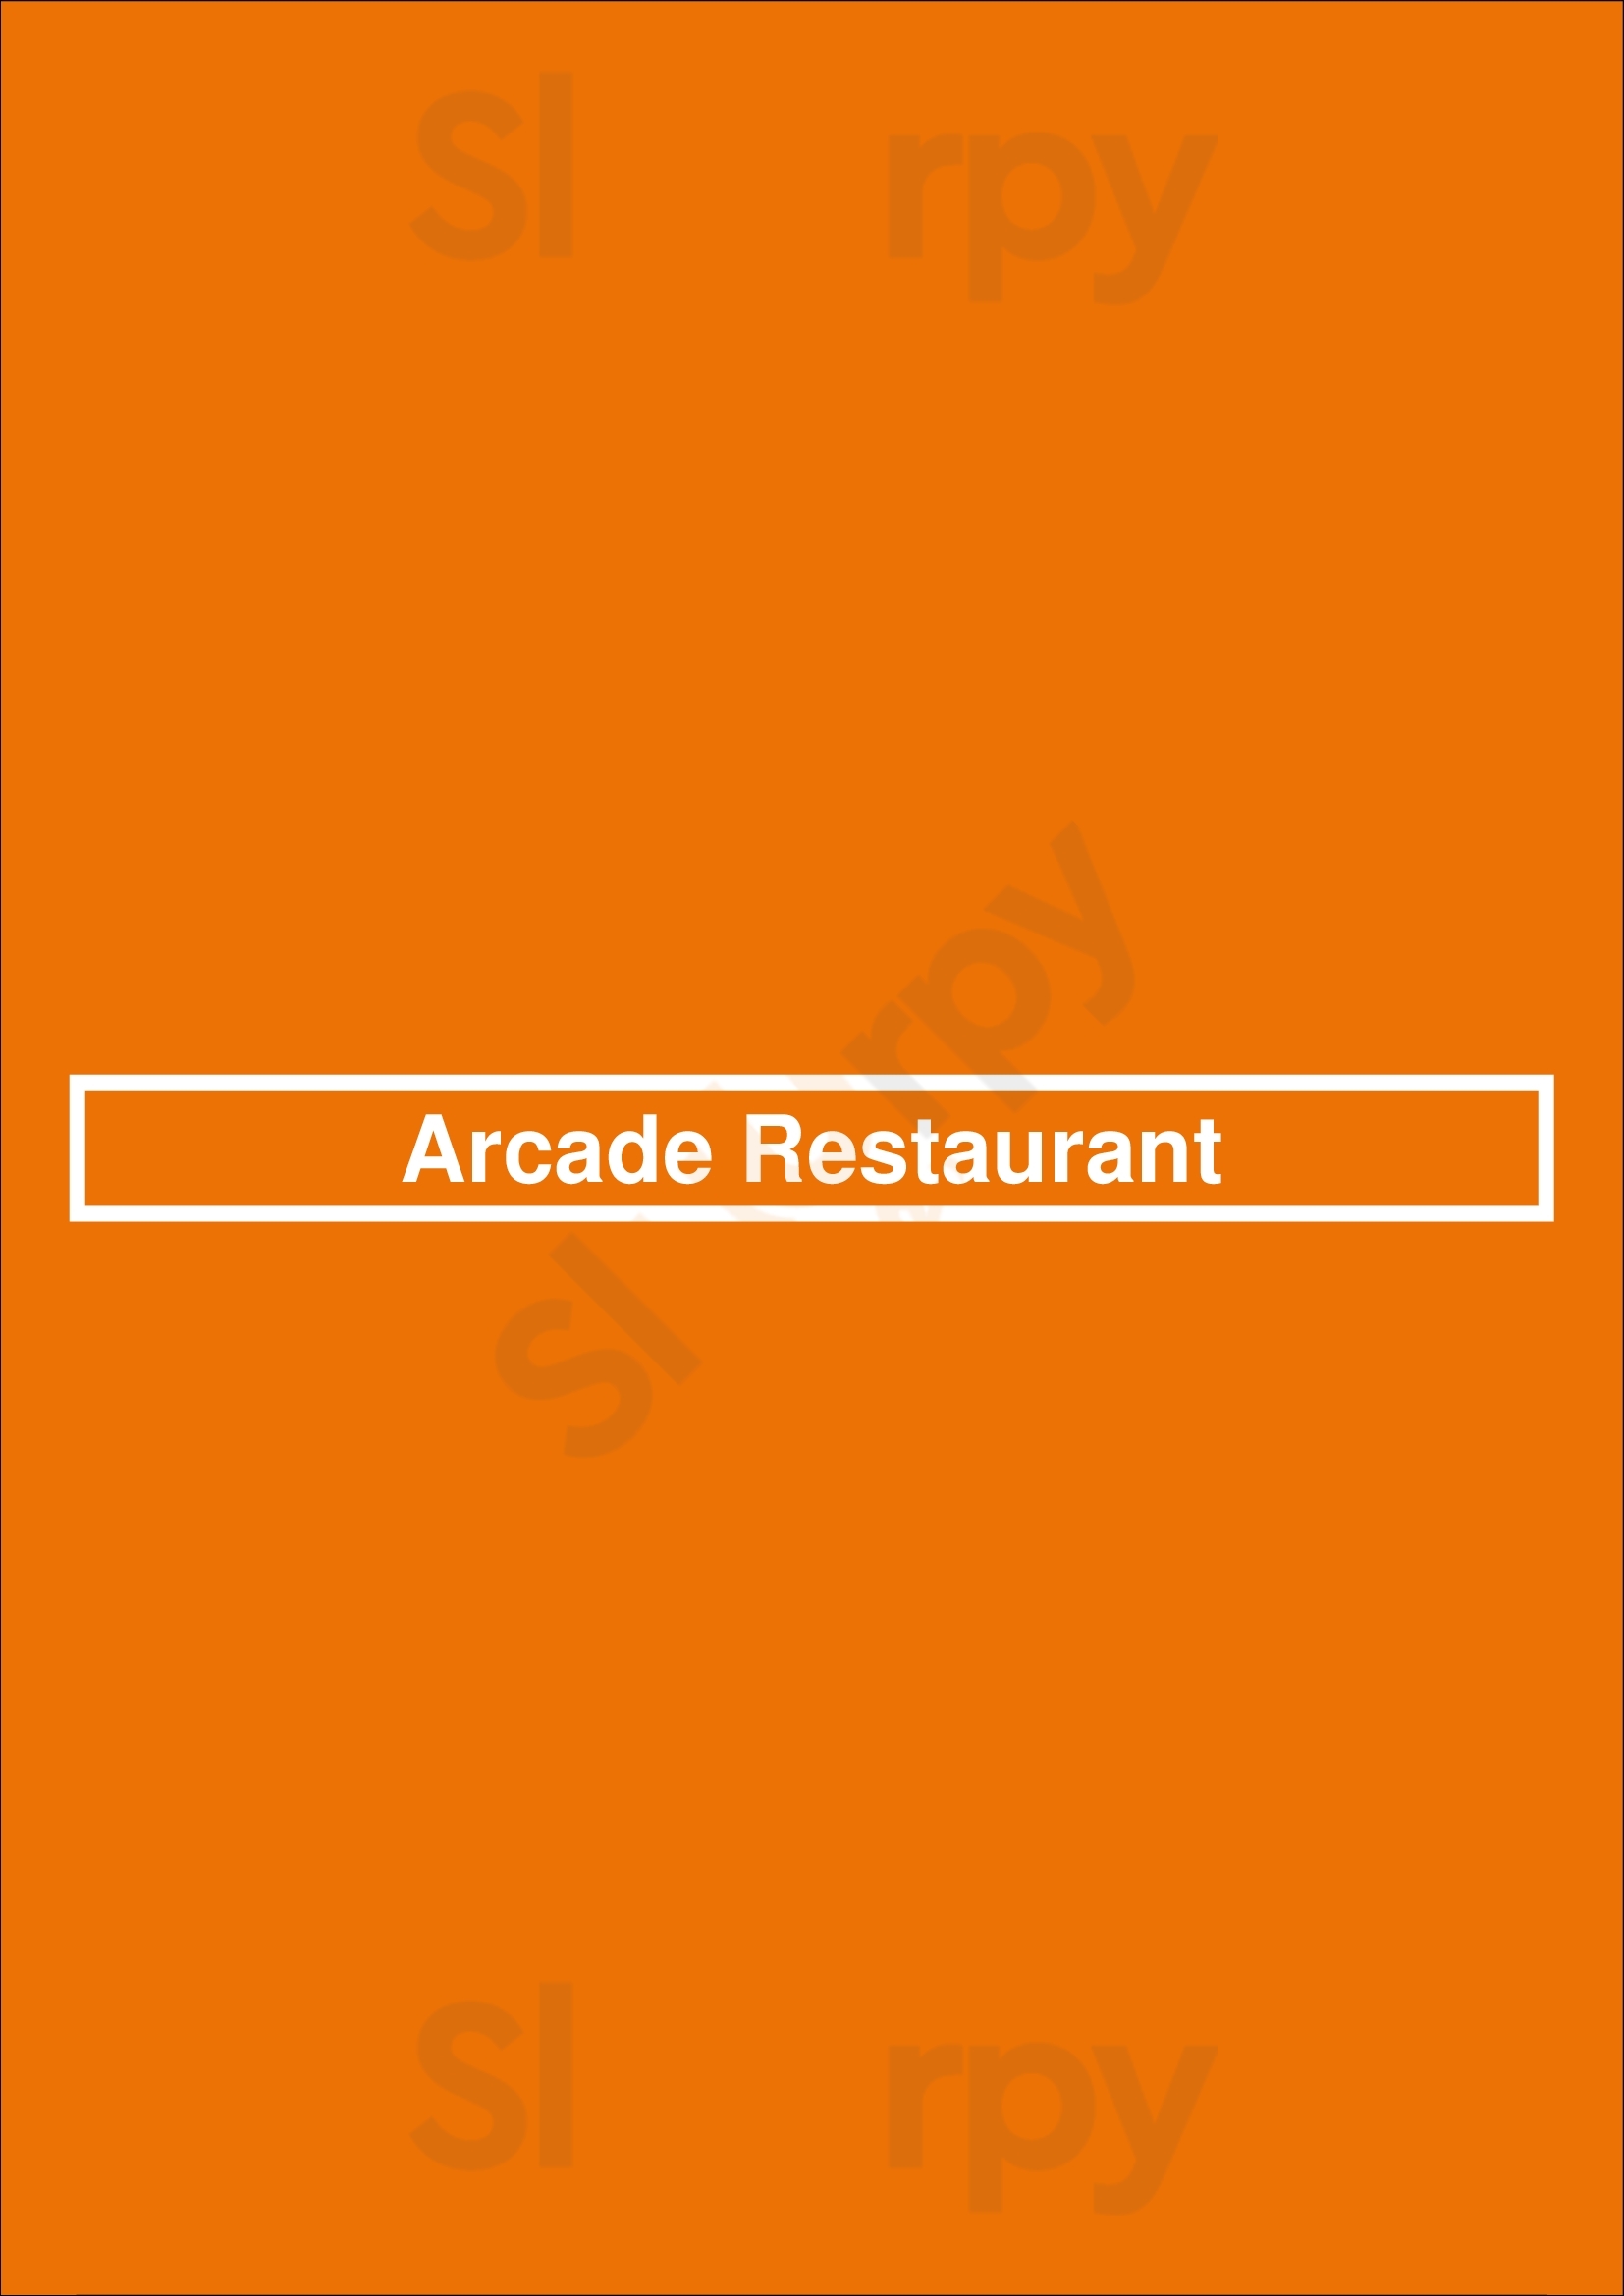 Arcade Restaurant Memphis Menu - 1